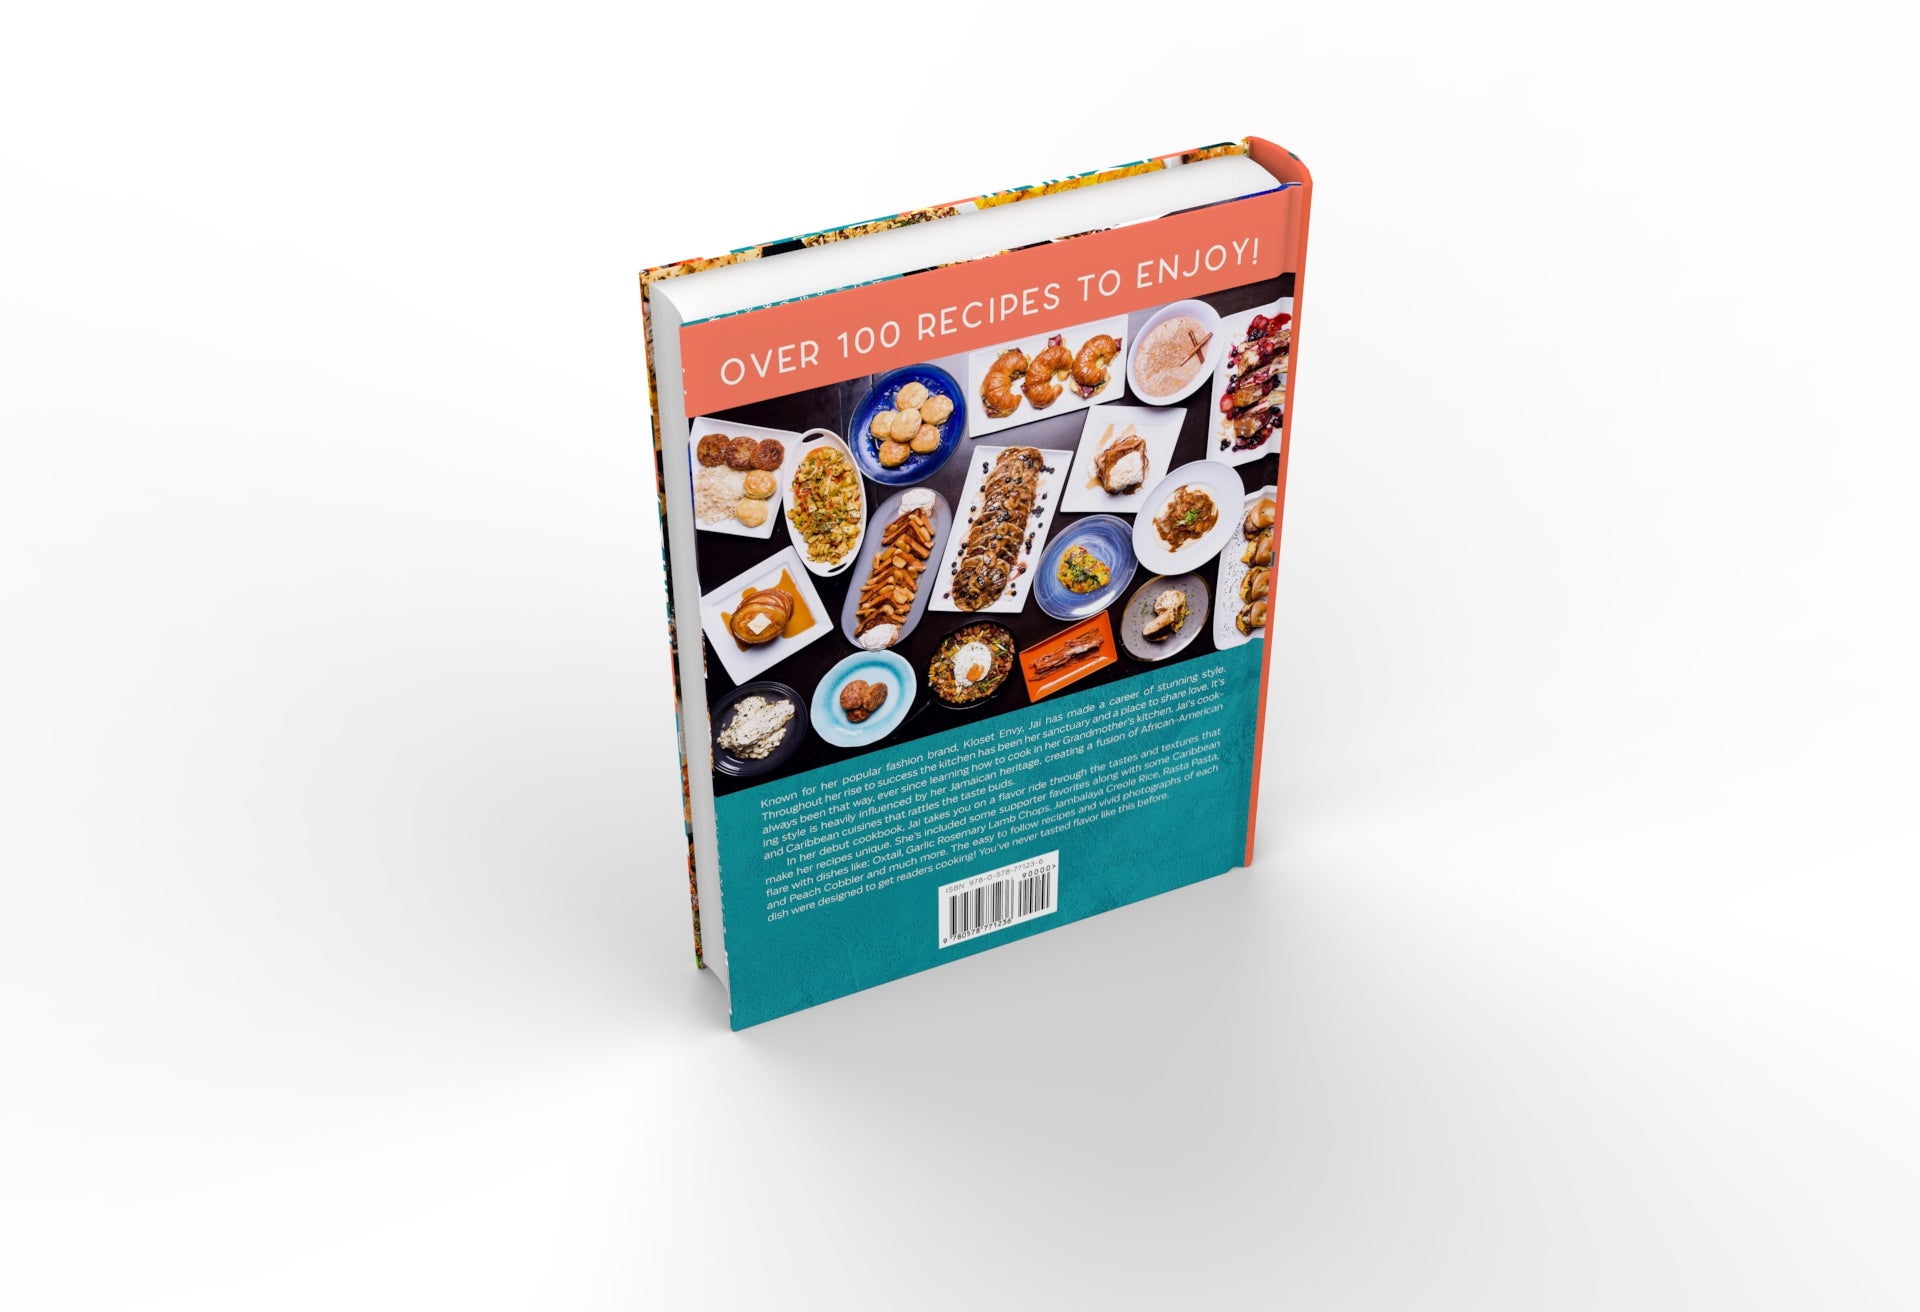 Kitchen Envy Cookbook Vol 1